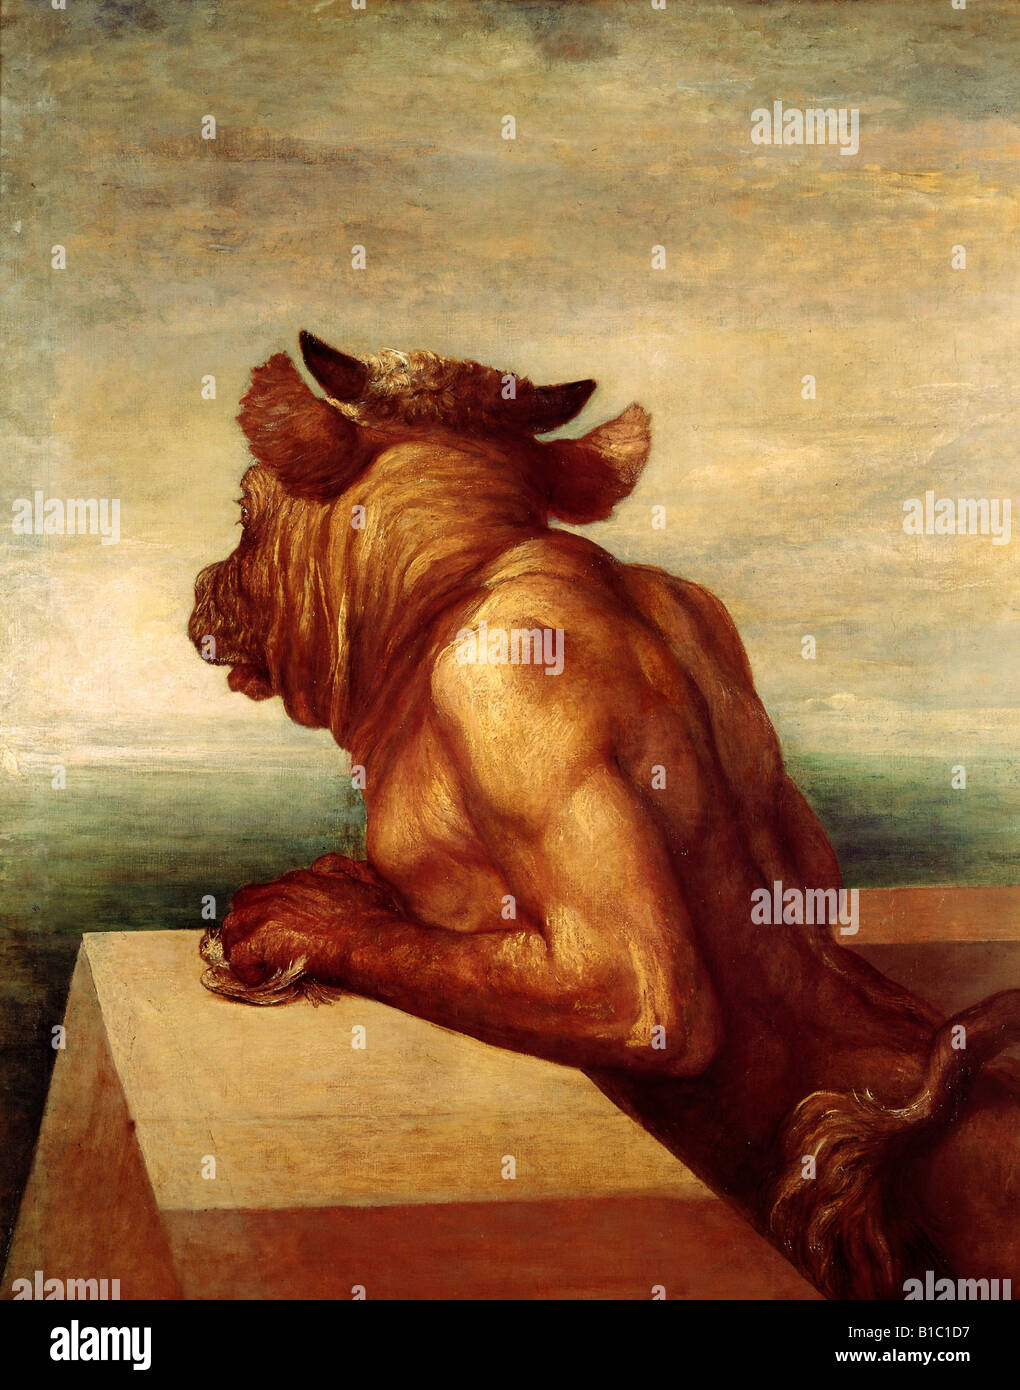 Bildende Kunst, Watt, George Frederic (1817-1904), Gemälde "The Minotaur", Tate Gallery, London, Romantik, Symbolismus, halb Stockfoto